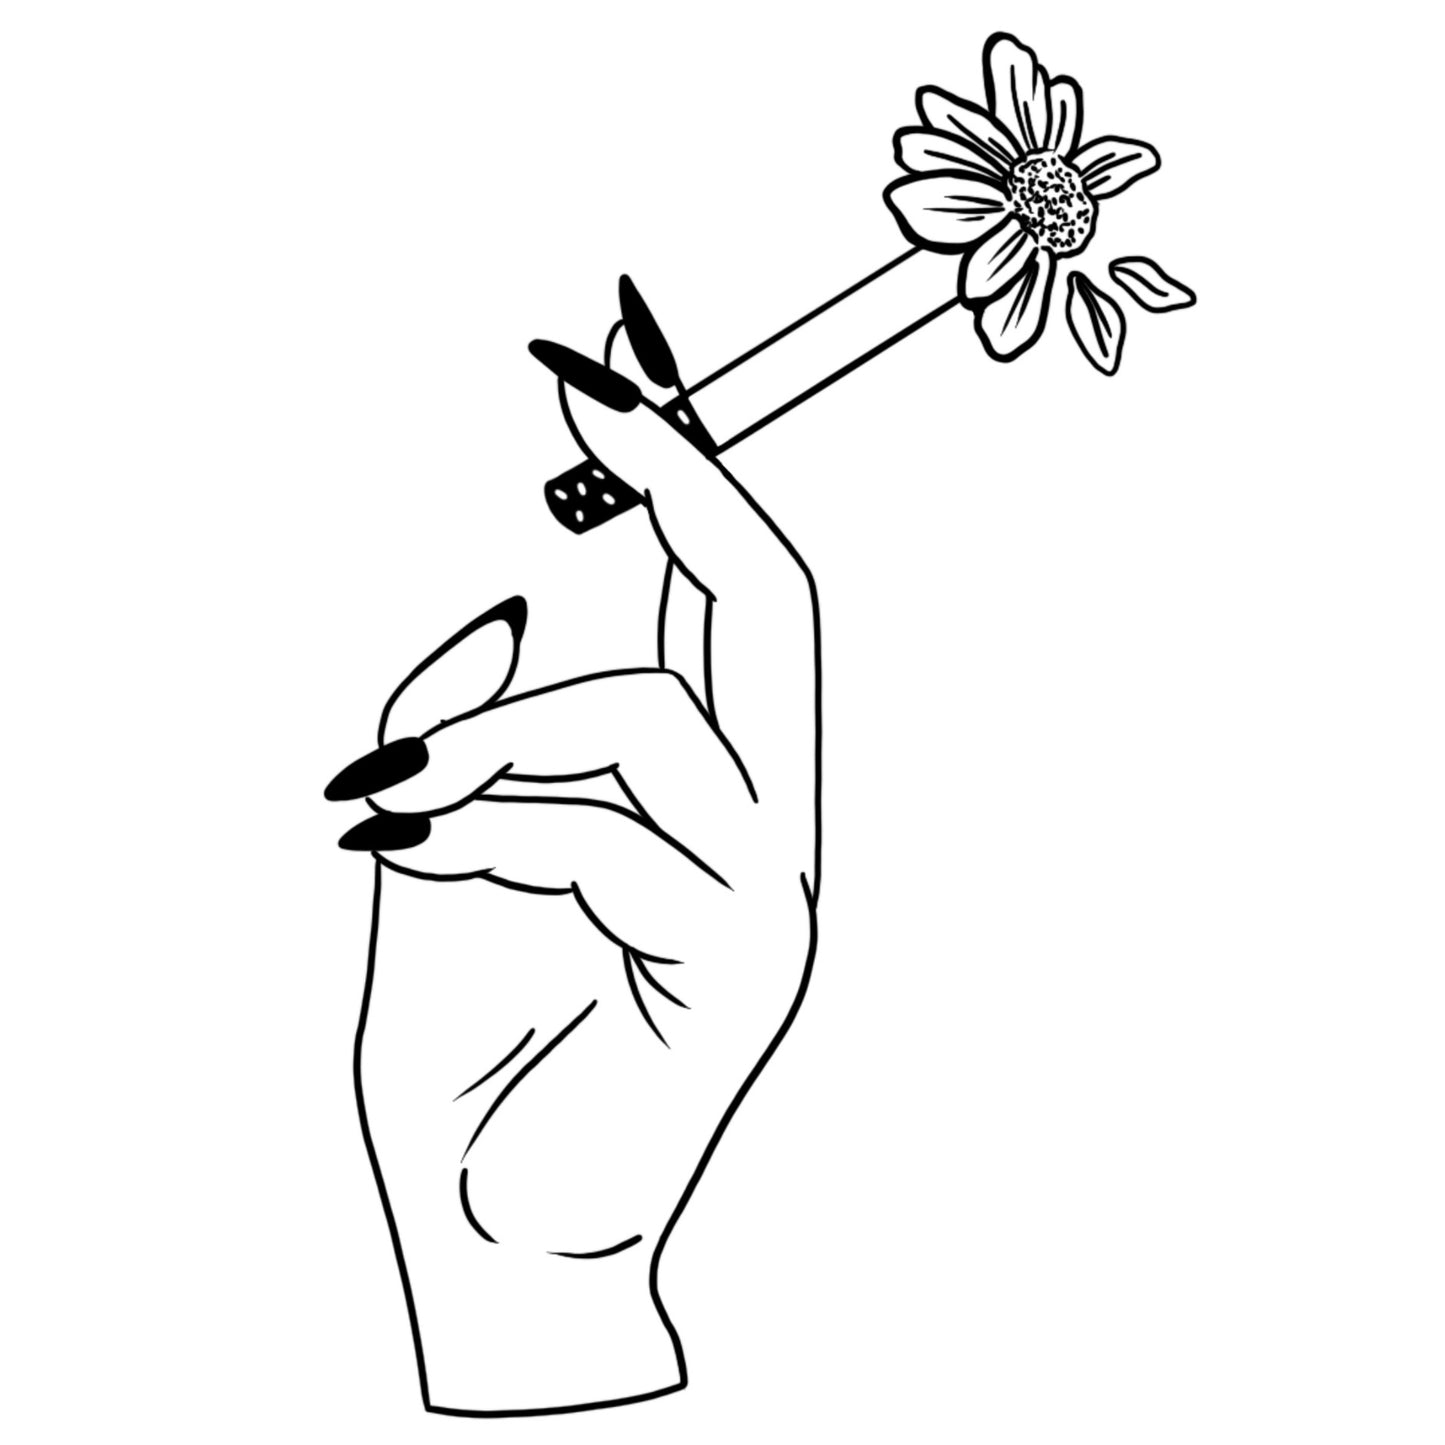 Hand Holding Cigarette Sticker